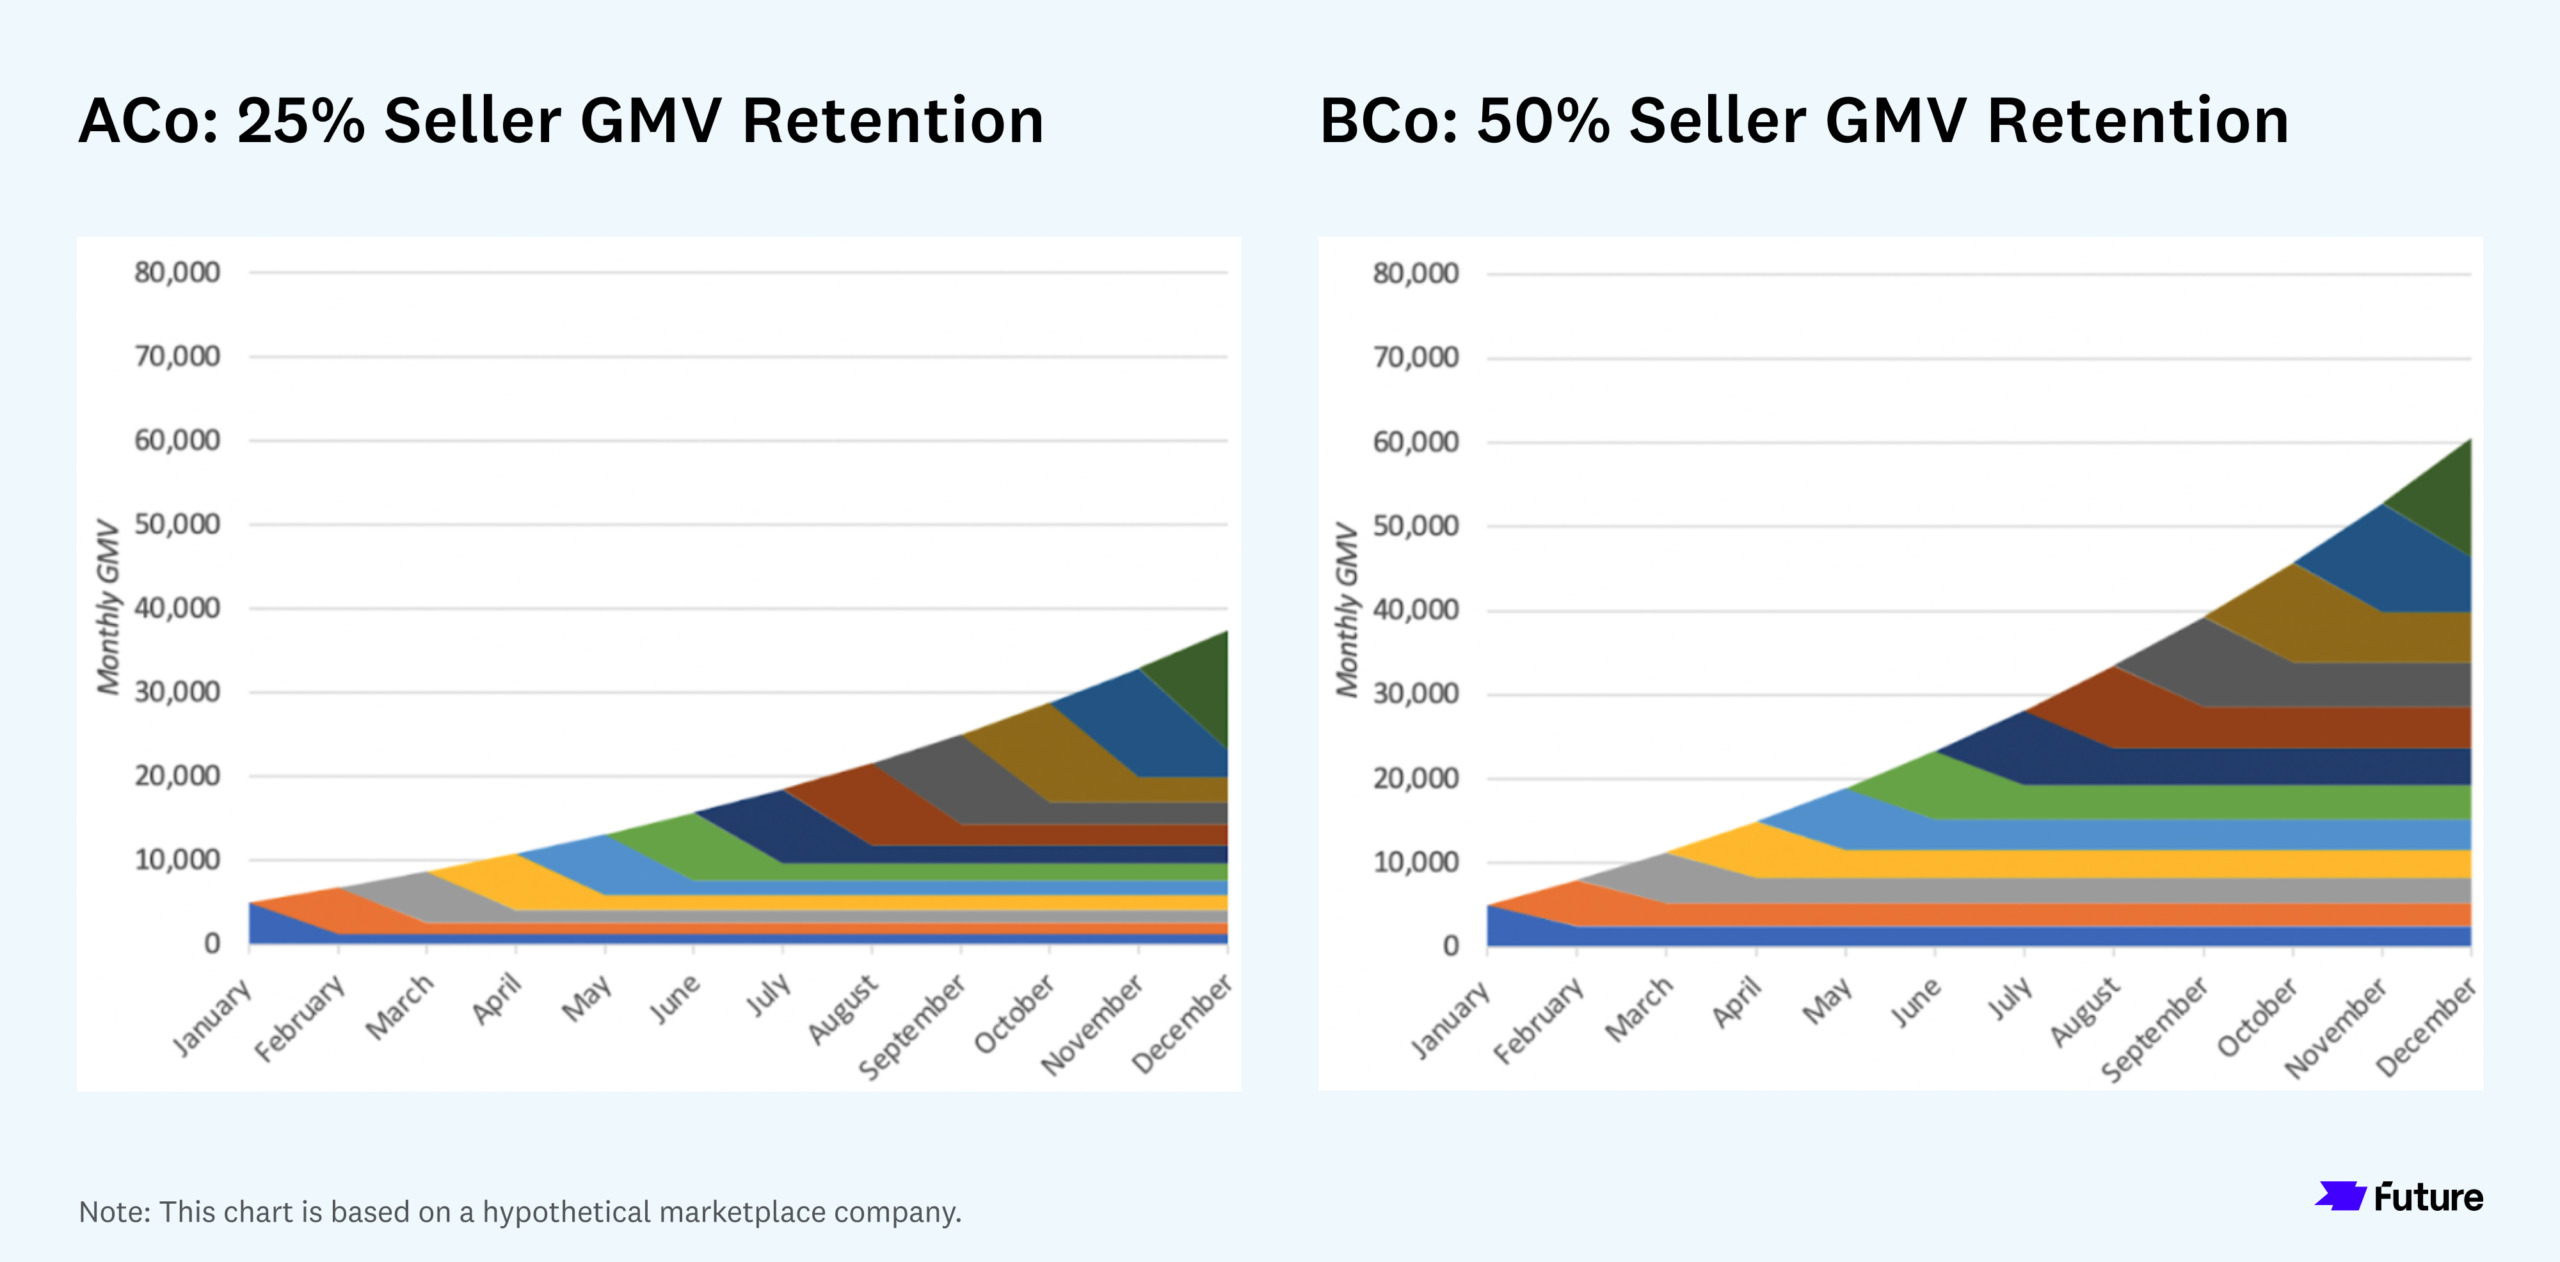 ACo vs BCo GMV Retention by Cohort